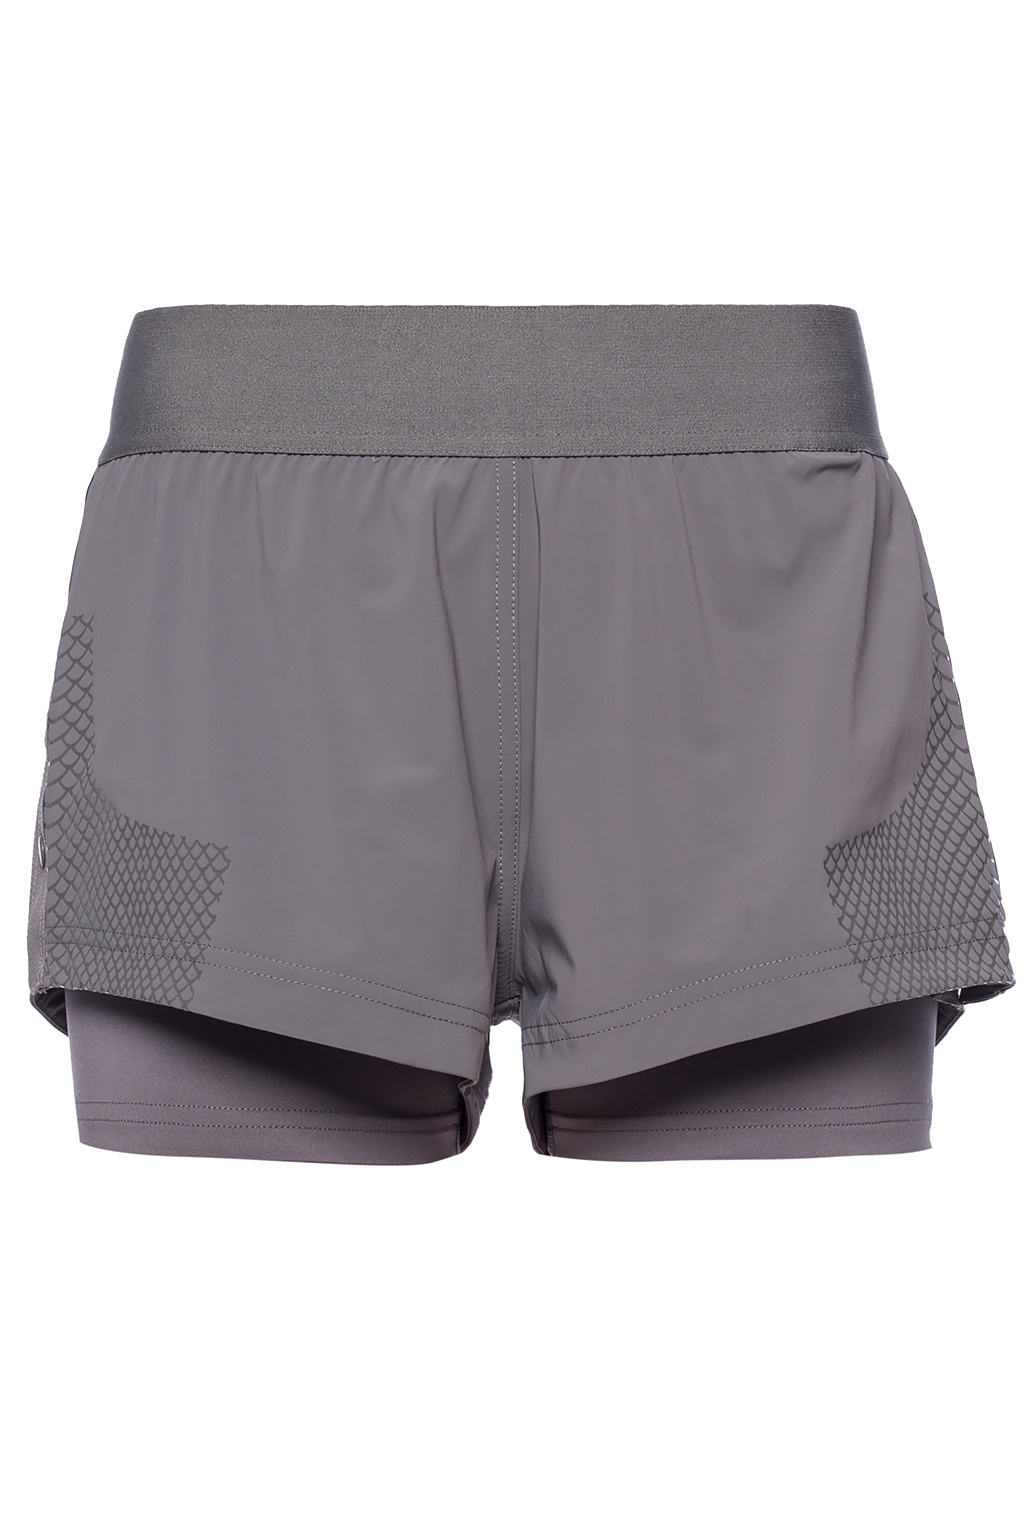 adidas double layer shorts